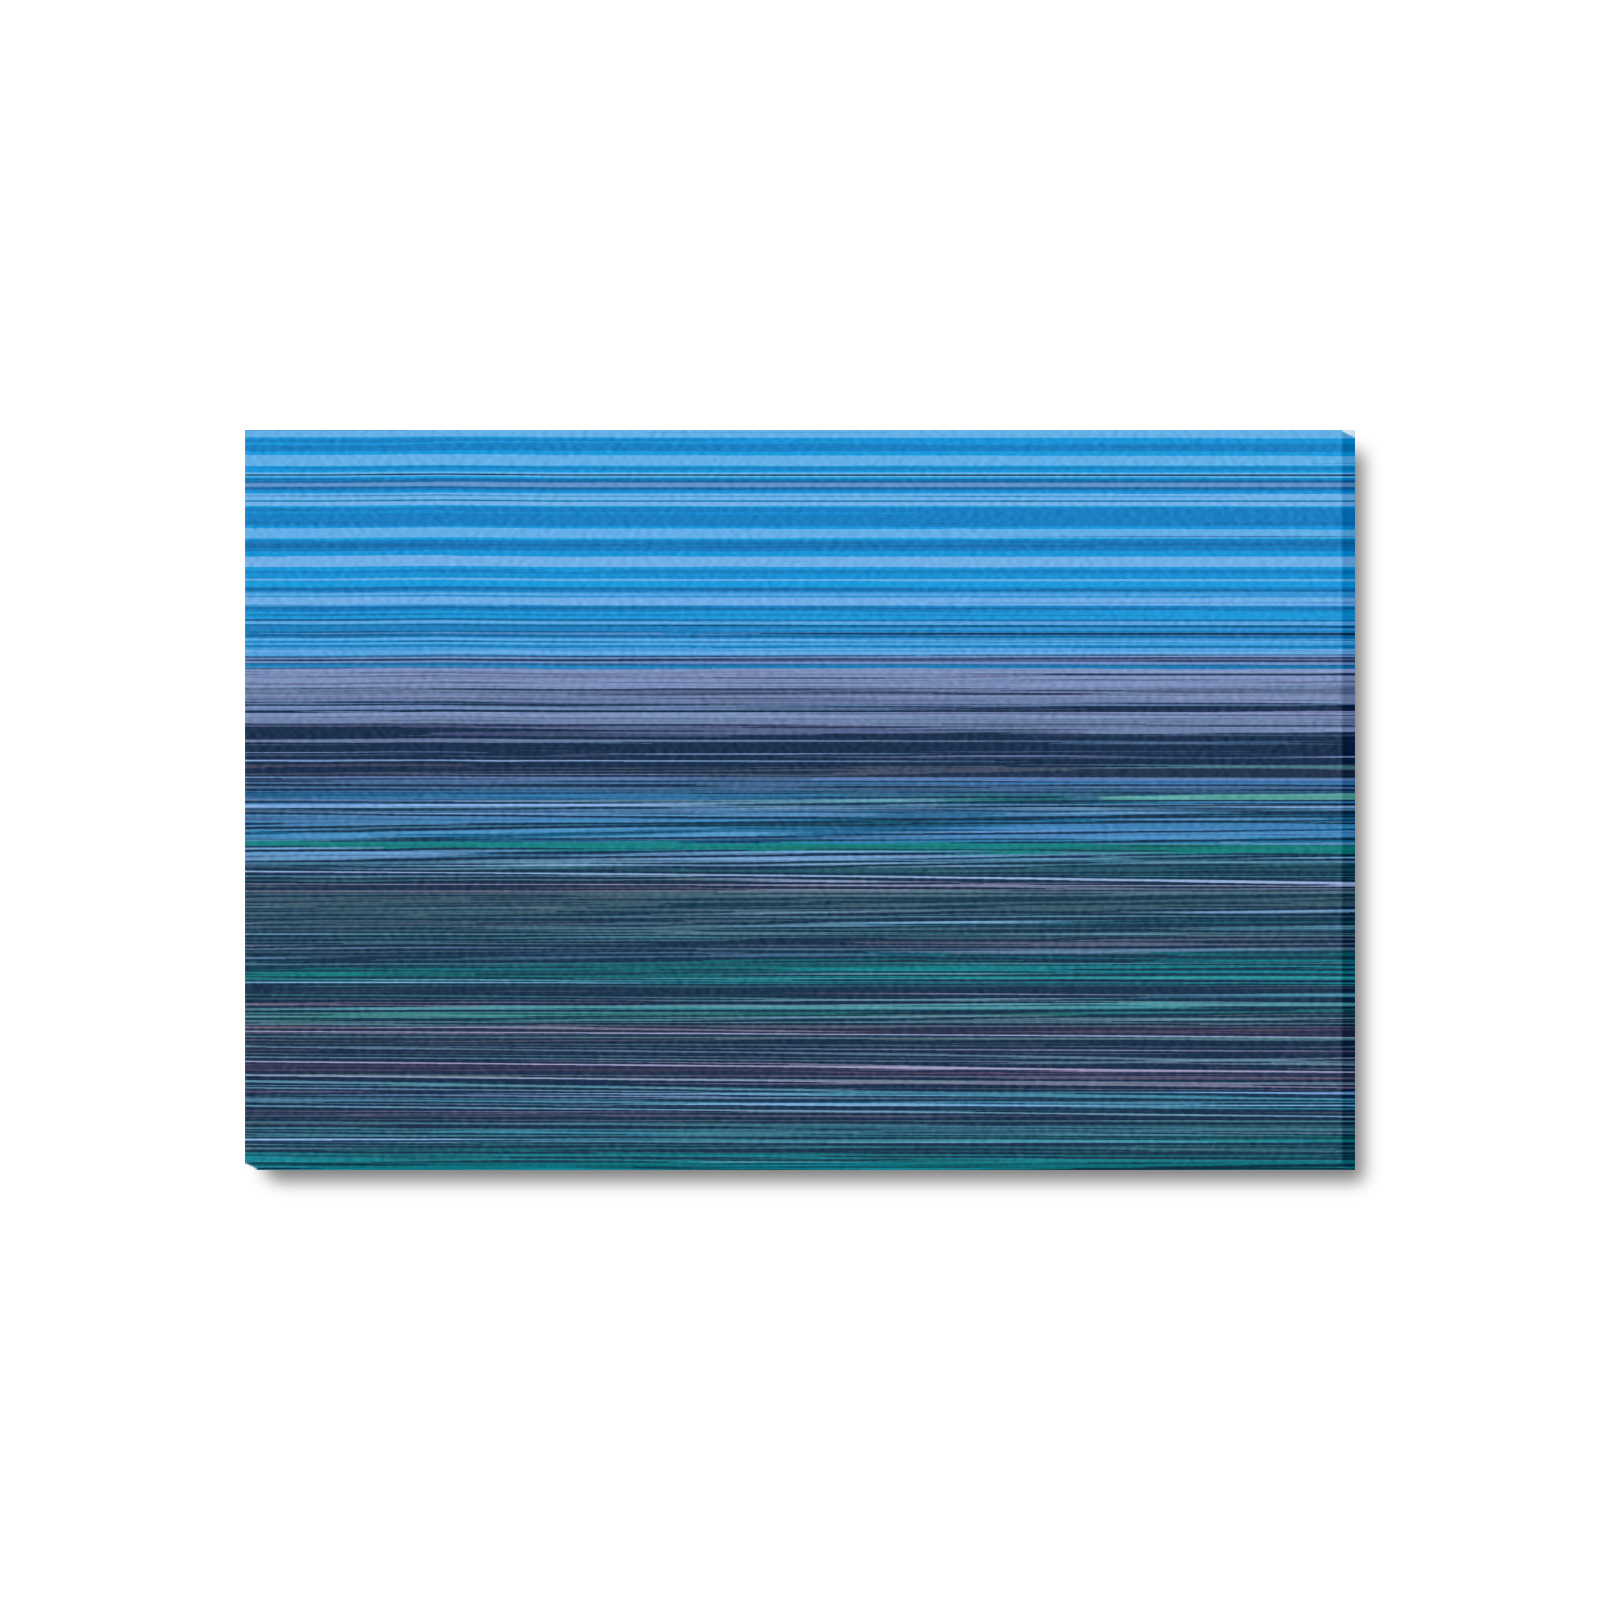 Abstract Blue Horizontal Stripes Frame Canvas Print 24"x16"